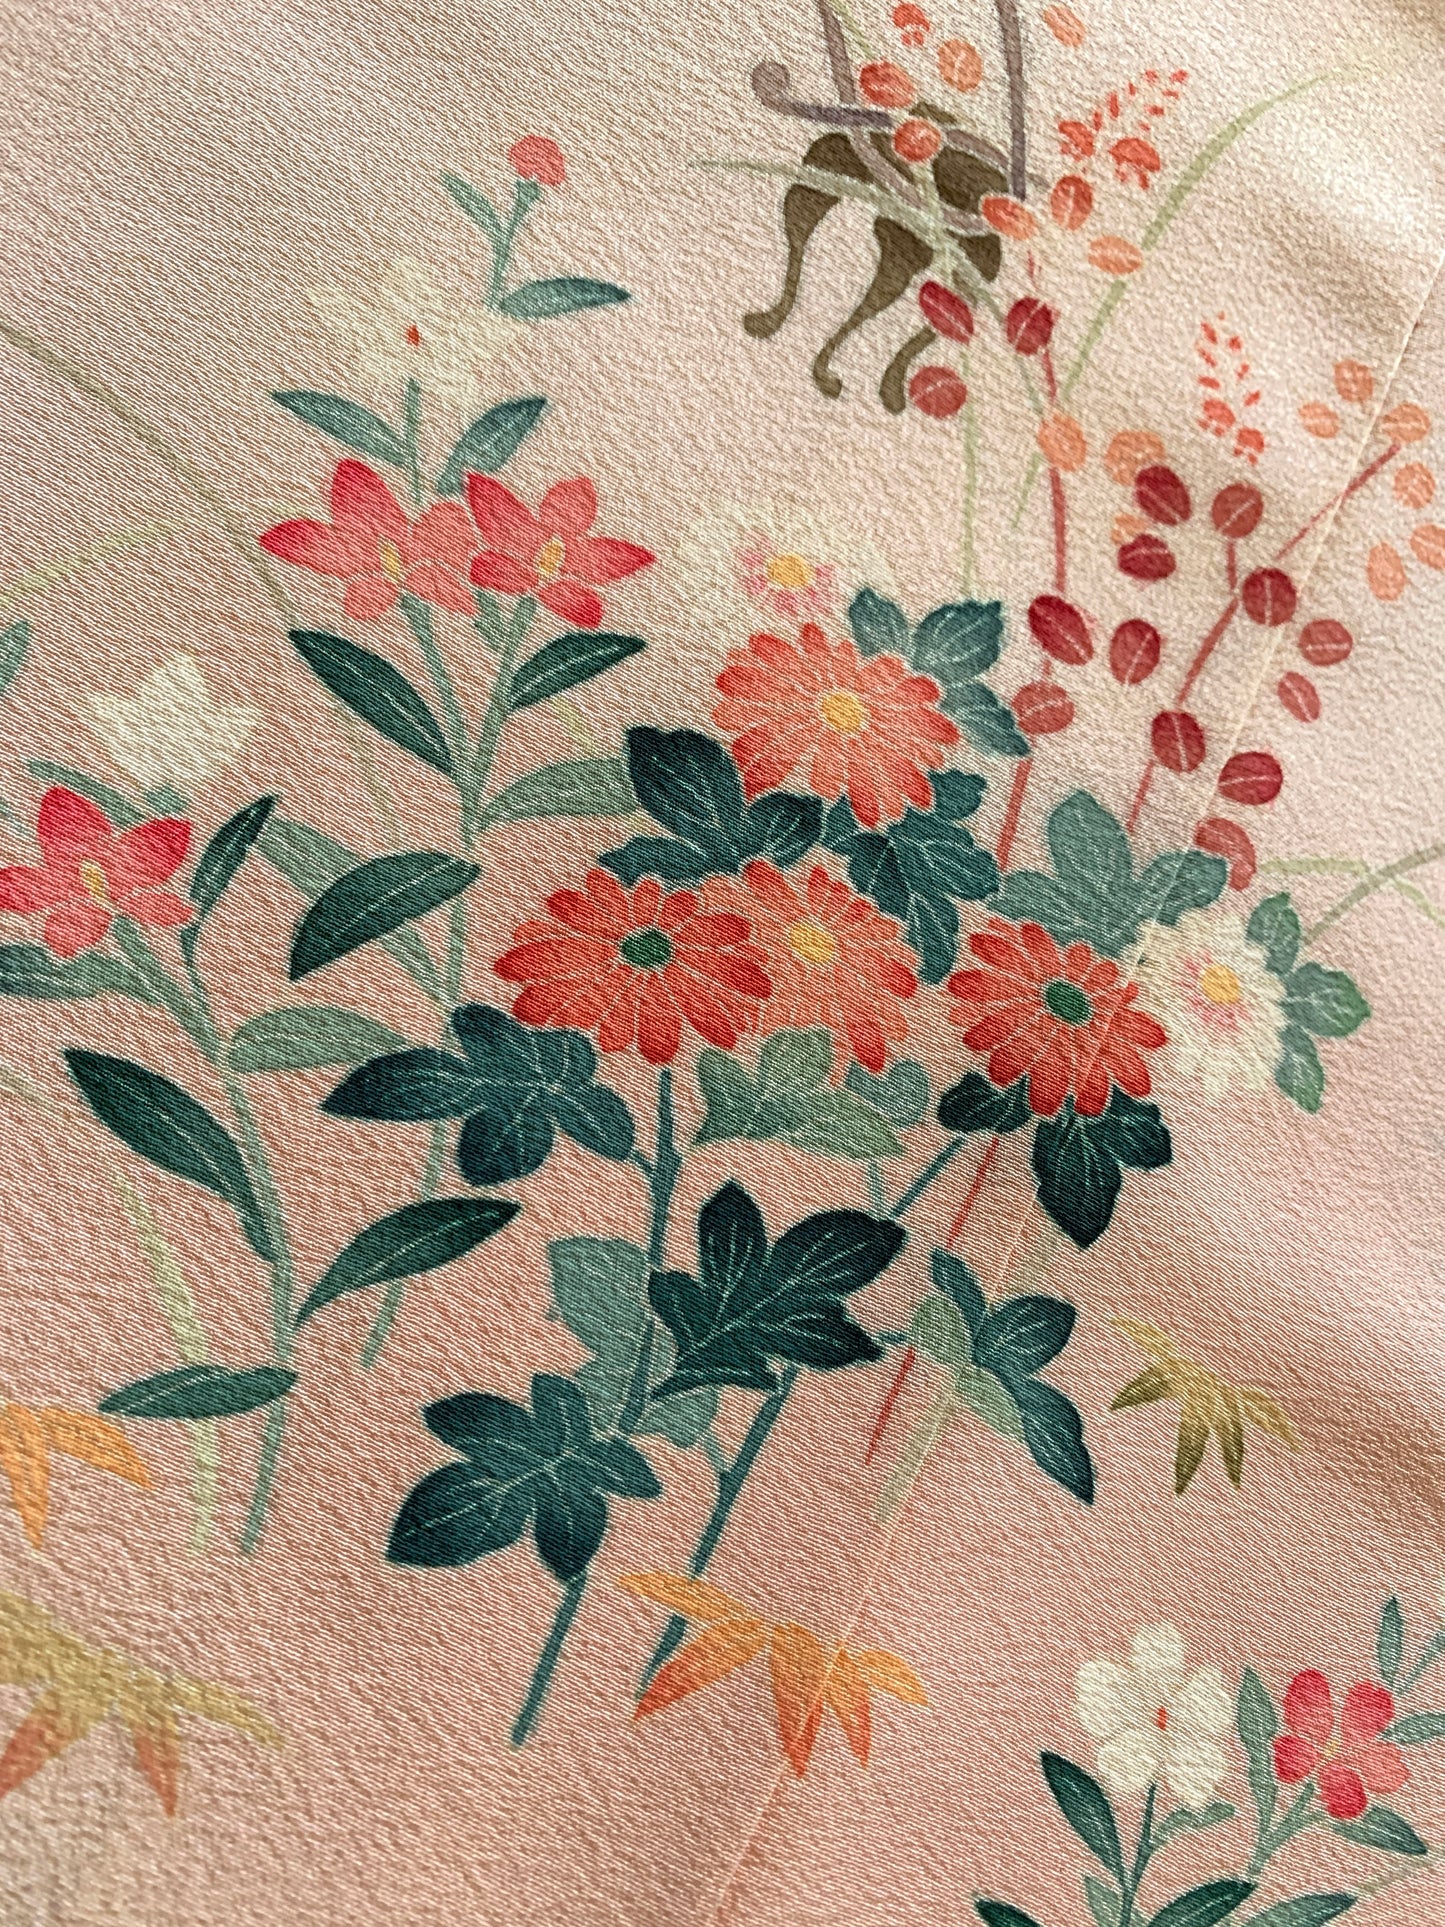 Kimono fabric for custom dress order, fabric #64